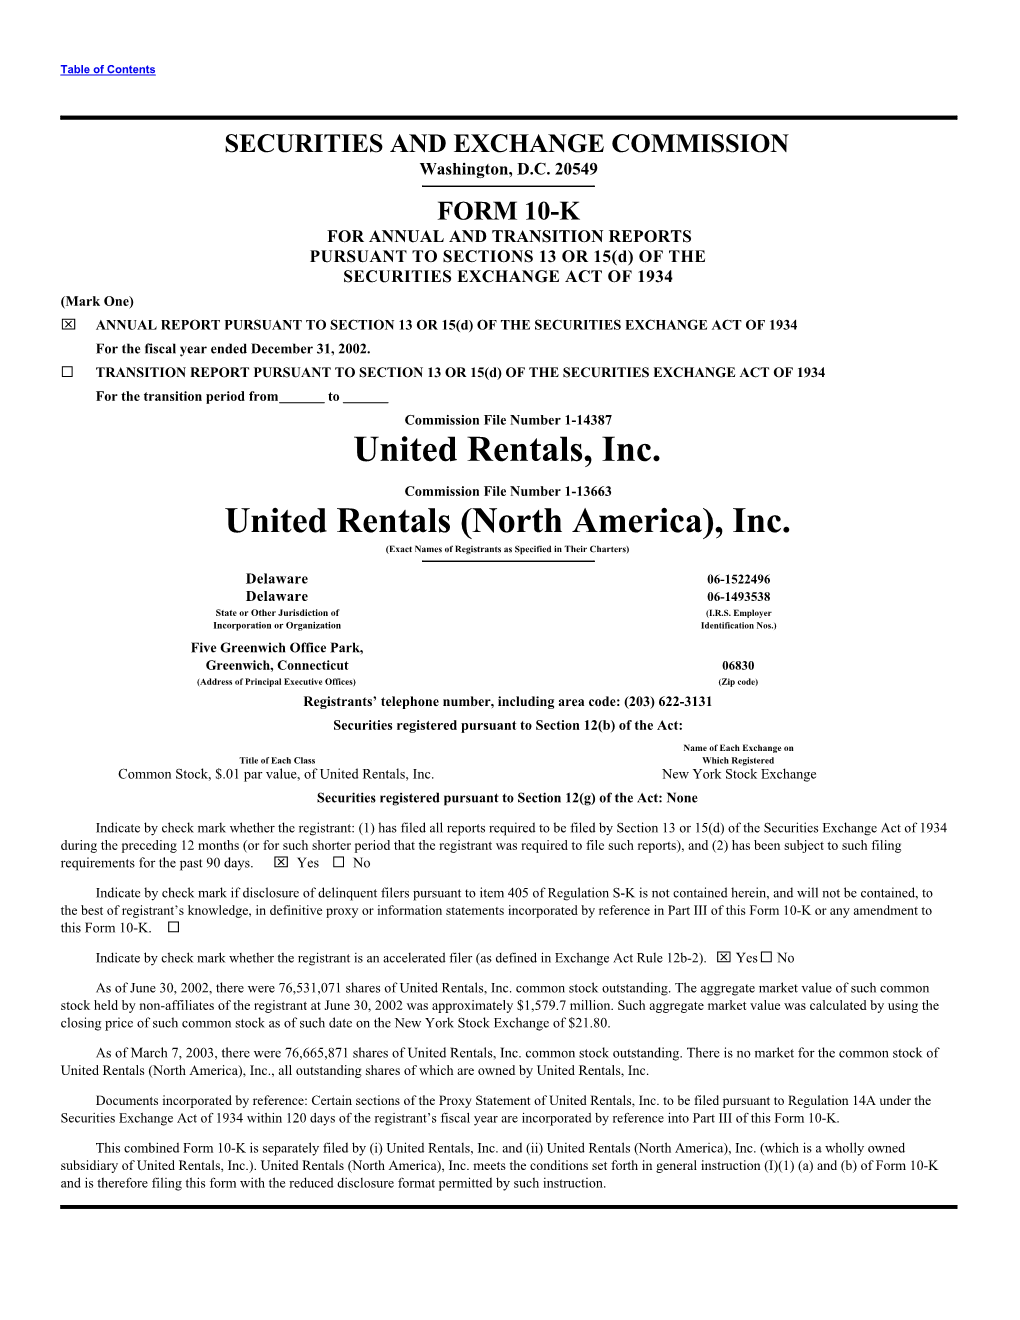 United Rentals, Inc. United Rentals (North America), Inc